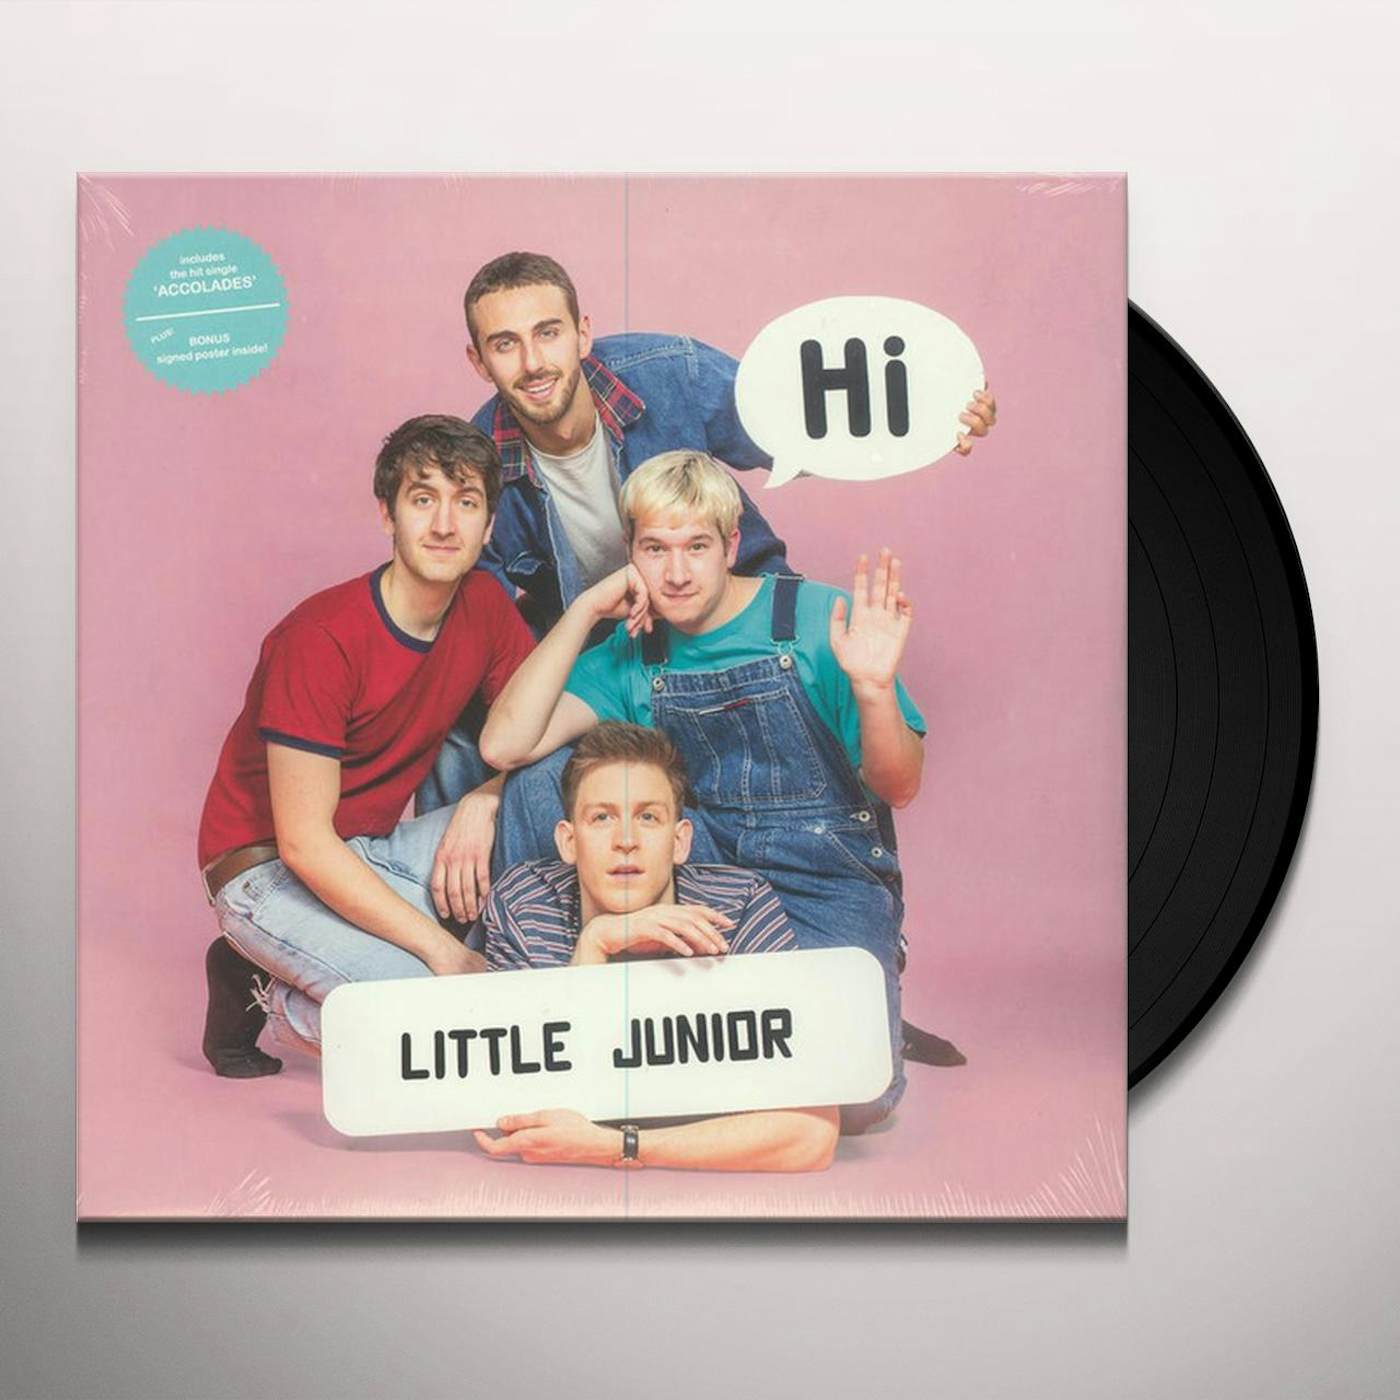 Little Junior HI Vinyl Record